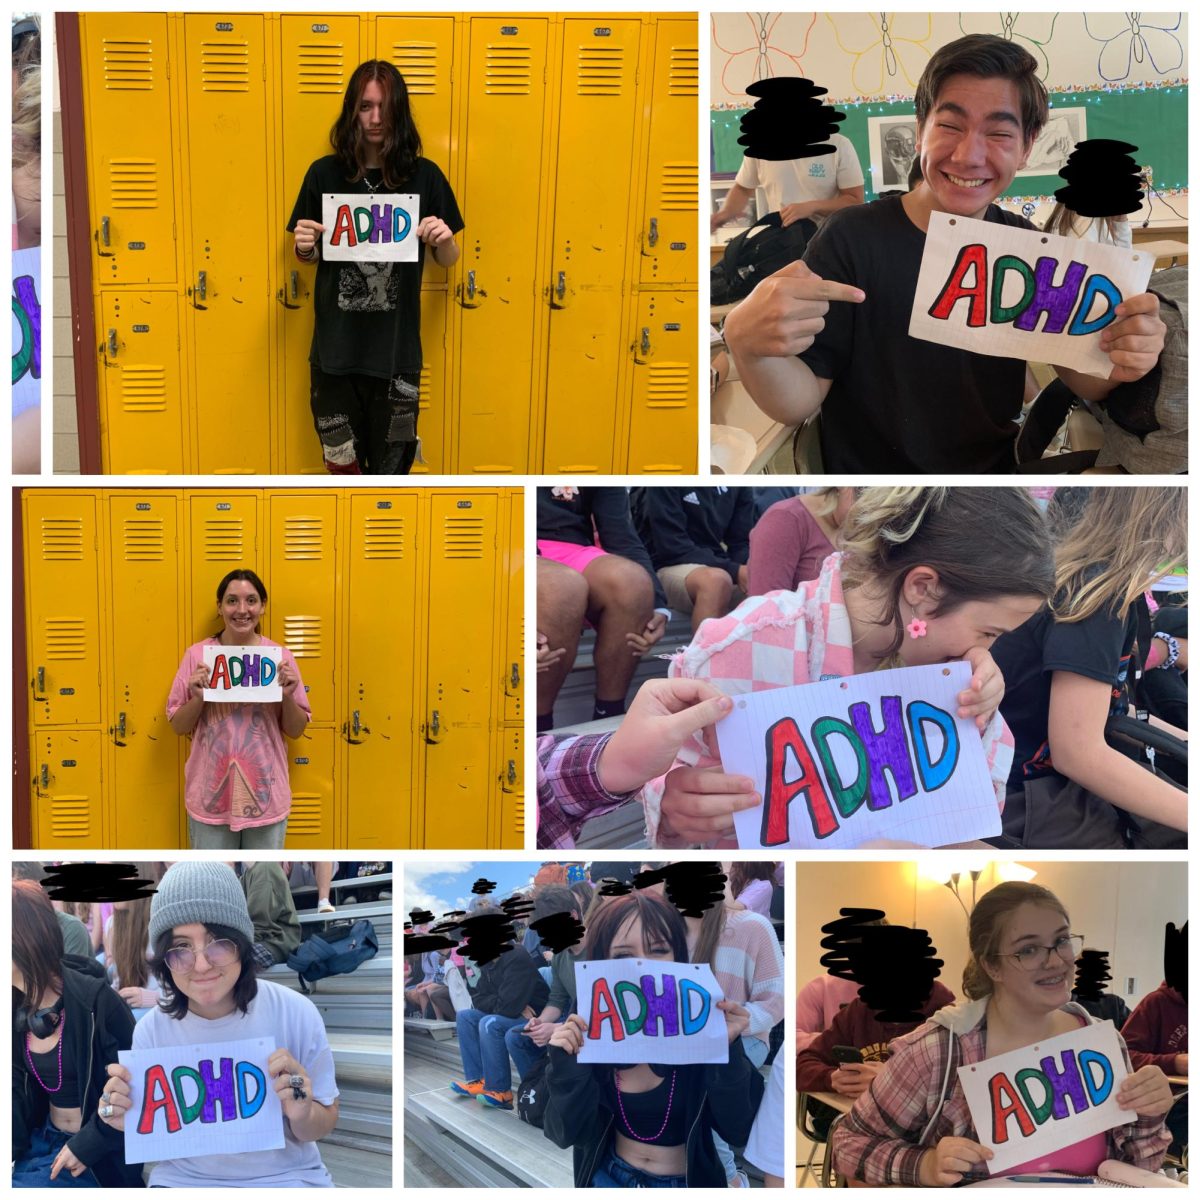 Students advocating for ADHD 
(Top: MJ King, Daniel Frye
|Middle: Samantha Junker, Sophmore
|Bottom: Erin Menefee, Alex B, Jay Follin)